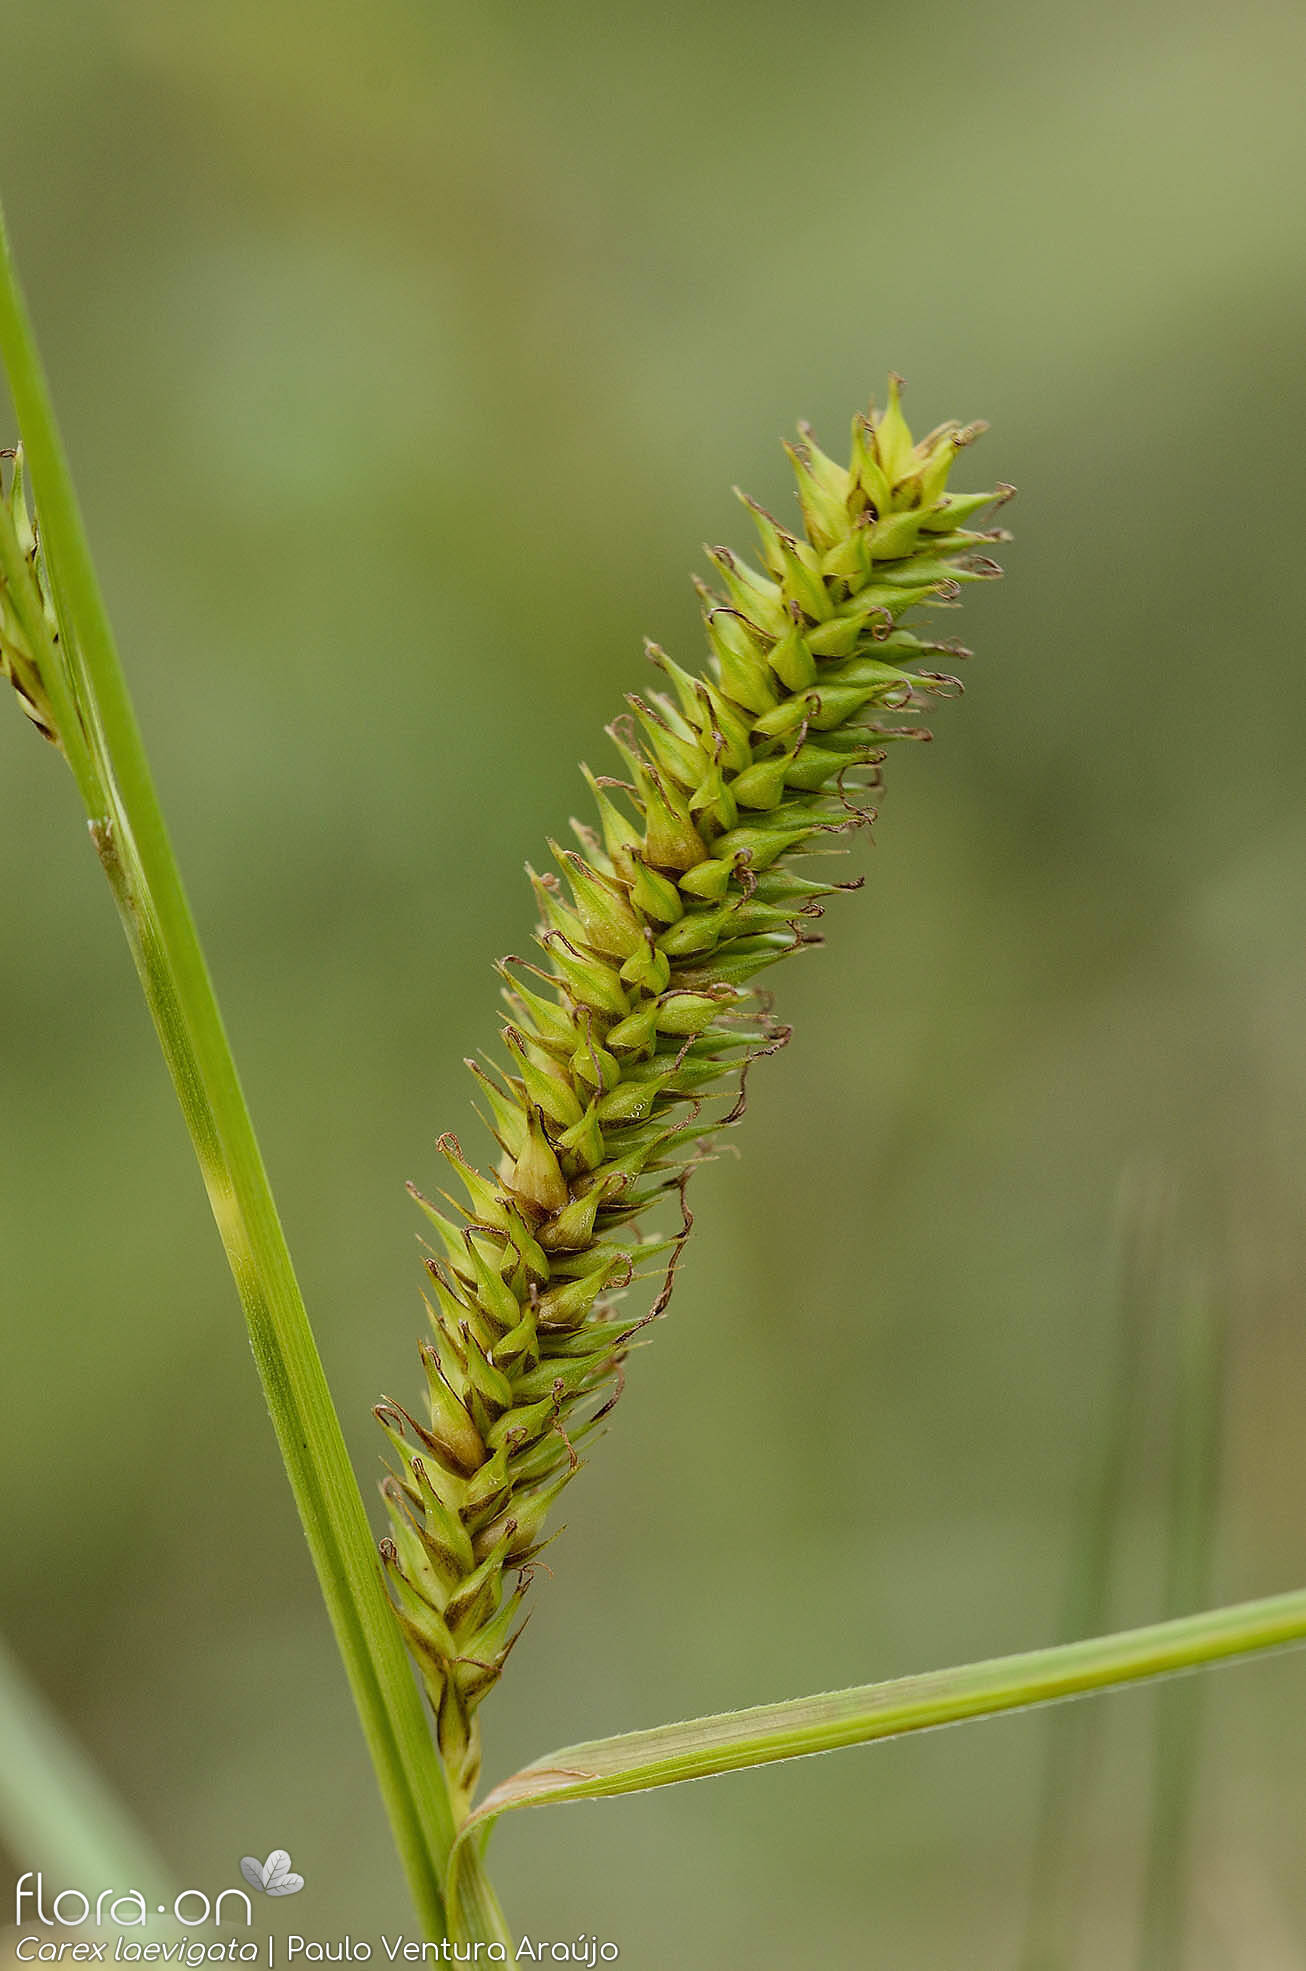 Carex laevigata - Flor (geral) | Paulo Ventura Araújo; CC BY-NC 4.0